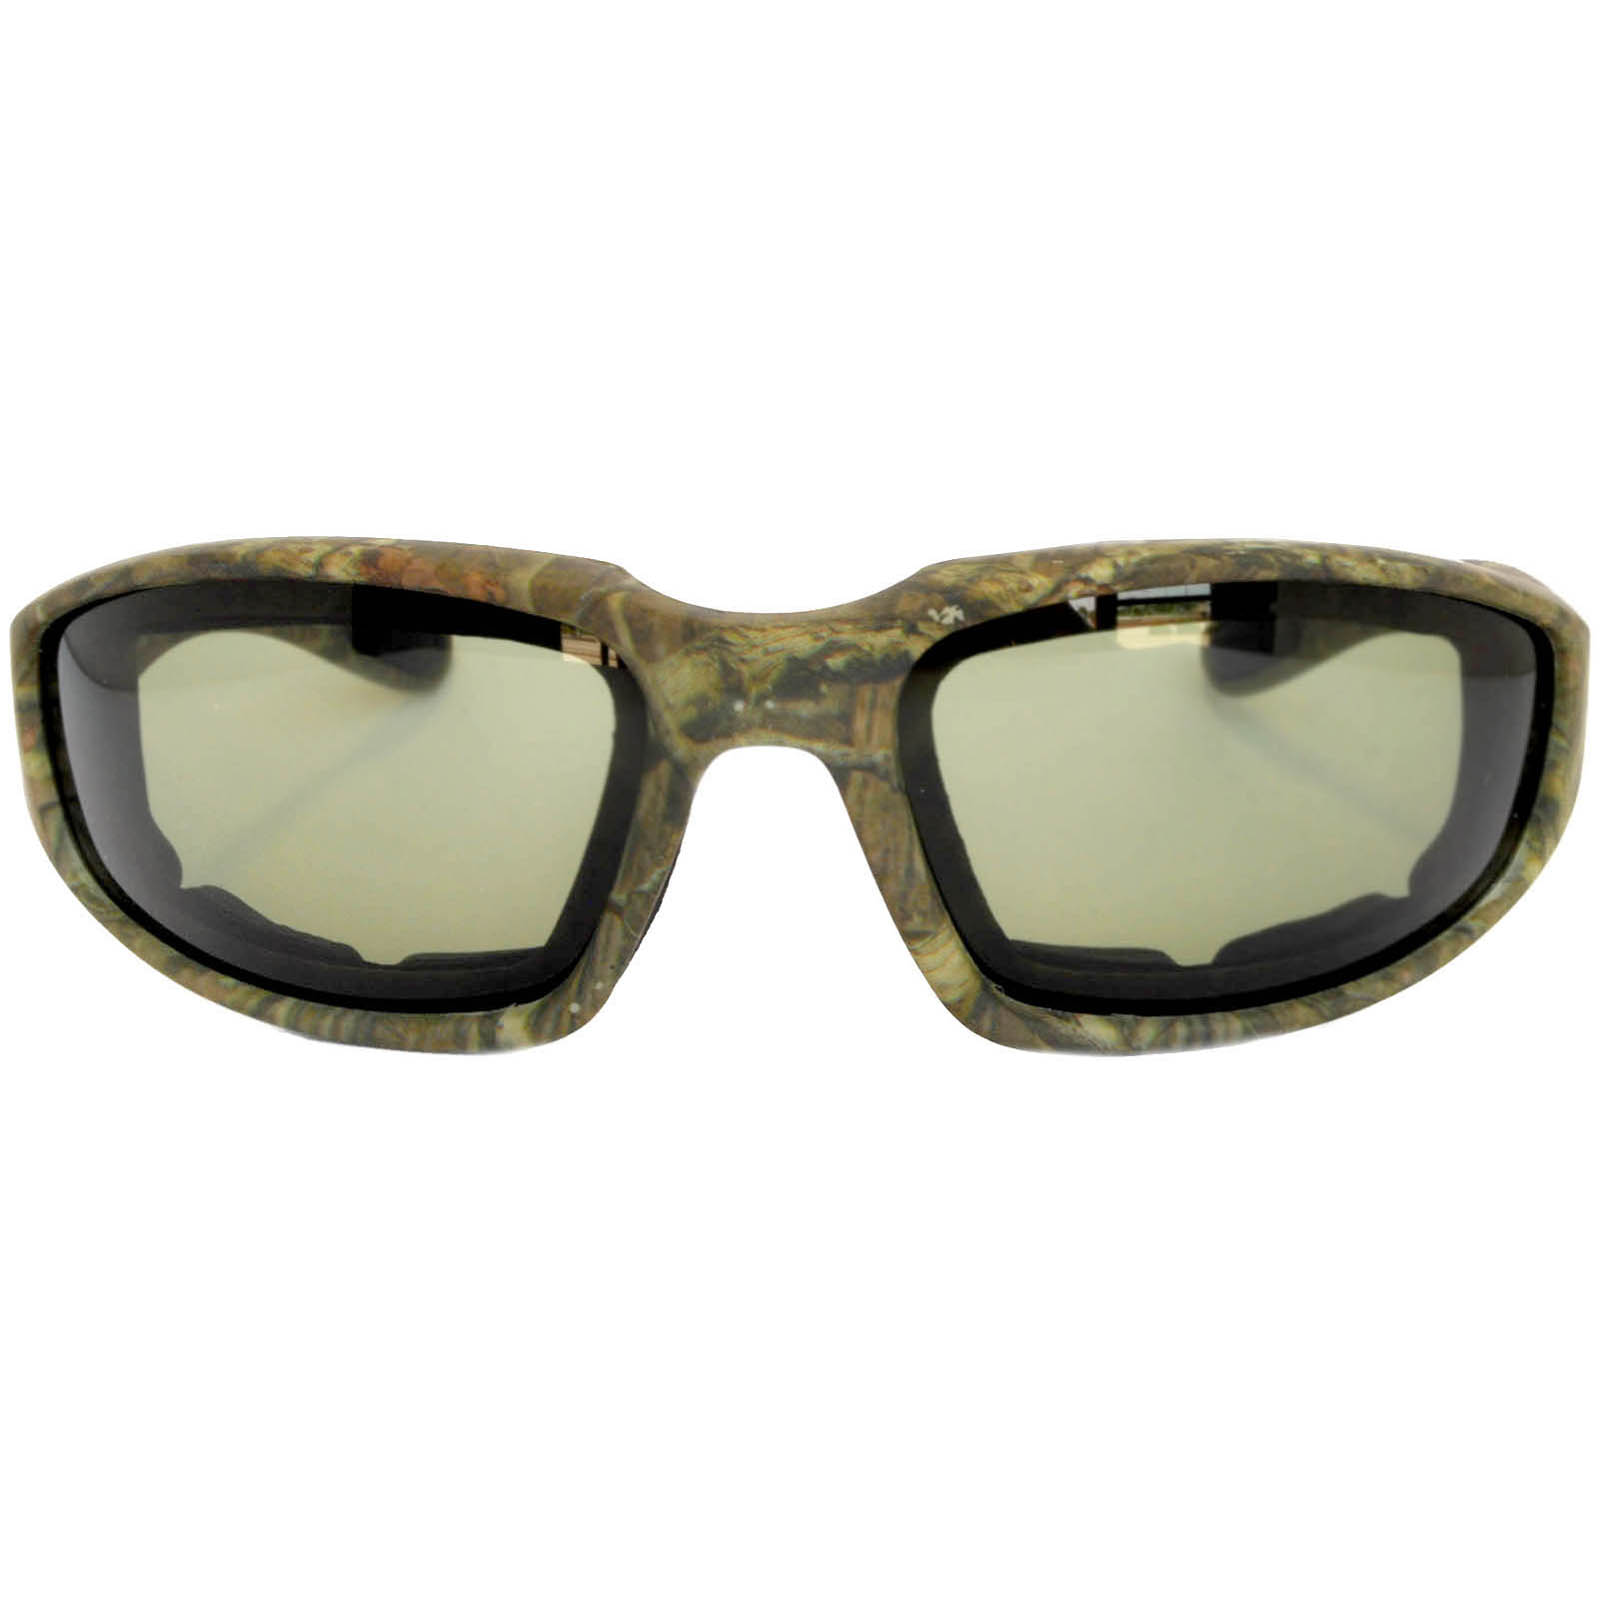 OWL Eyewear Motorcycle Padded Glasses Camo#1 Frame Green Lens (One Pair ...